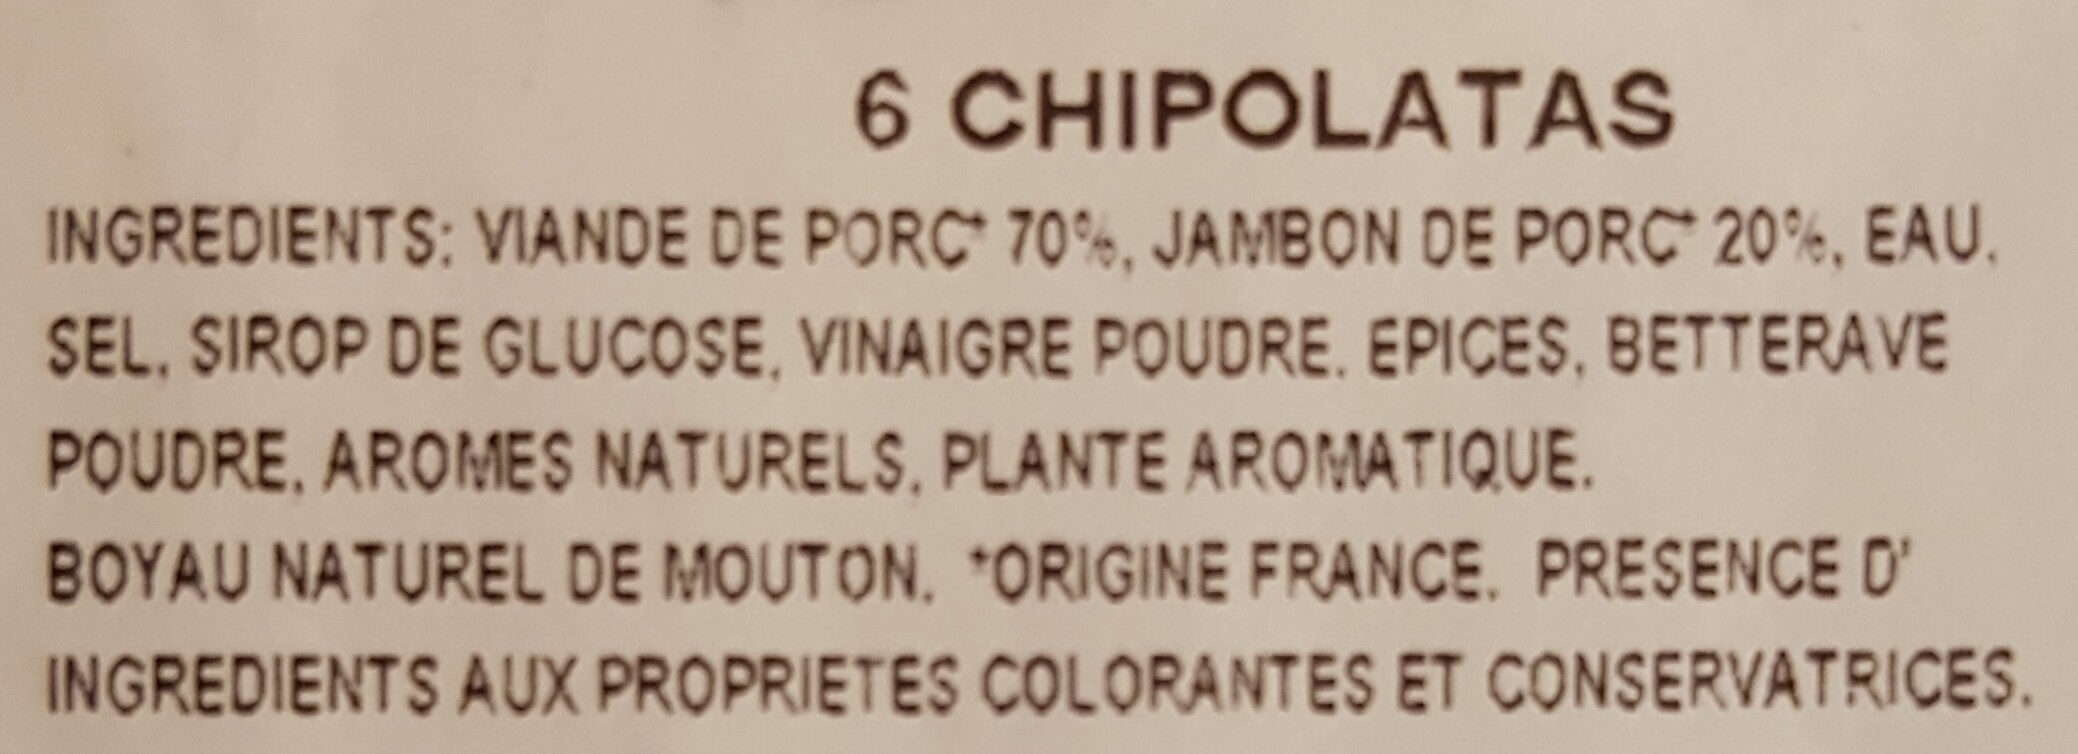 Chipolatas supérieures - Ingredienti - fr